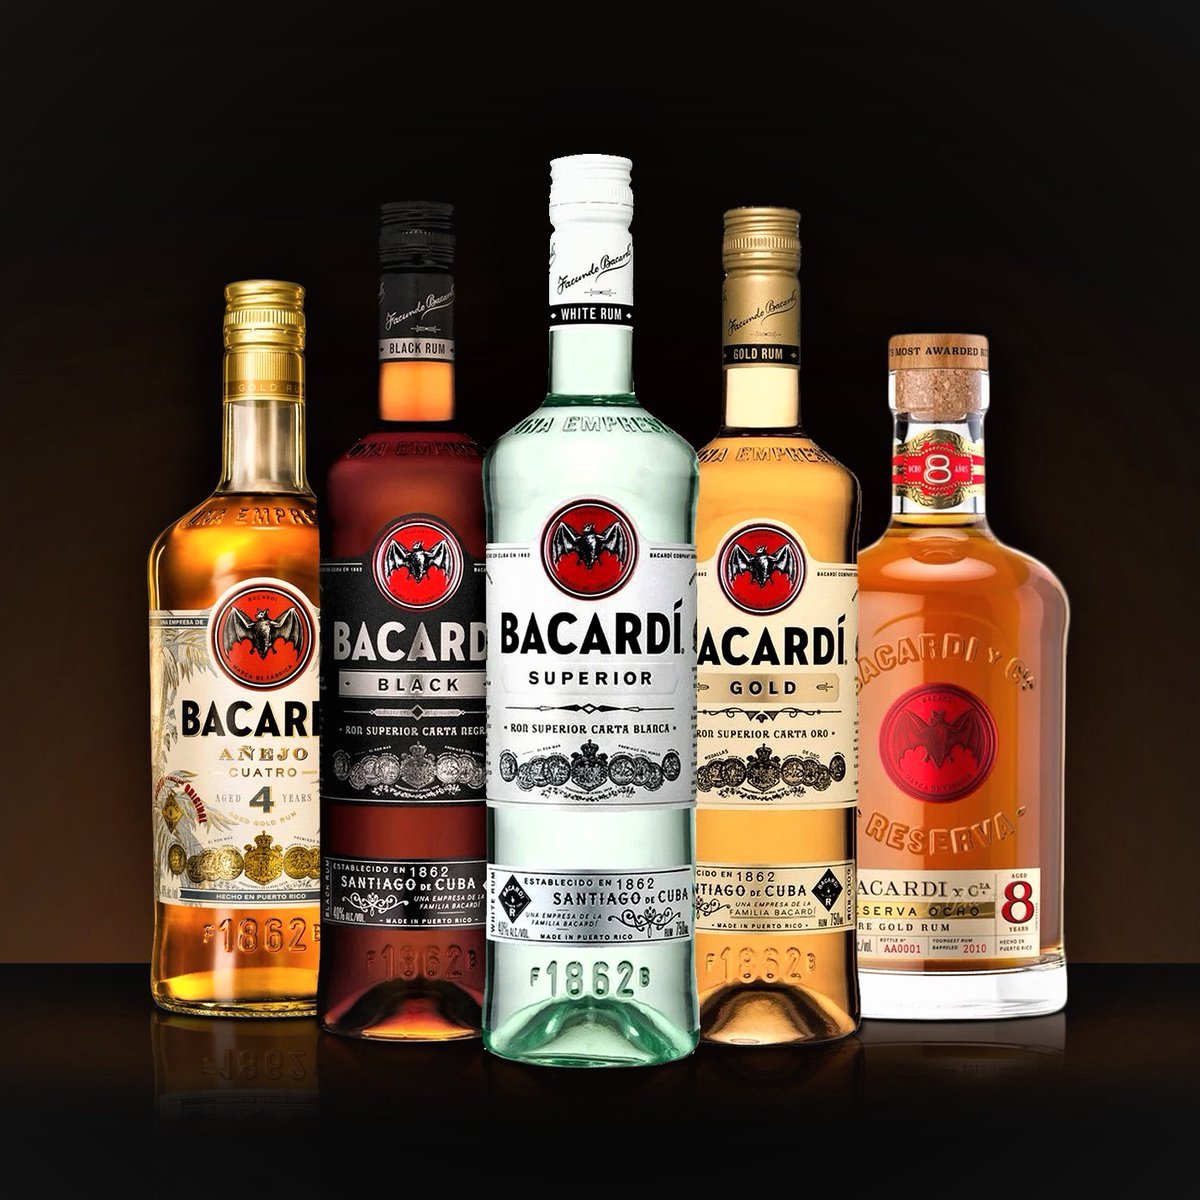 5 best Bacardi Rum & Bacardi Black vs Gold